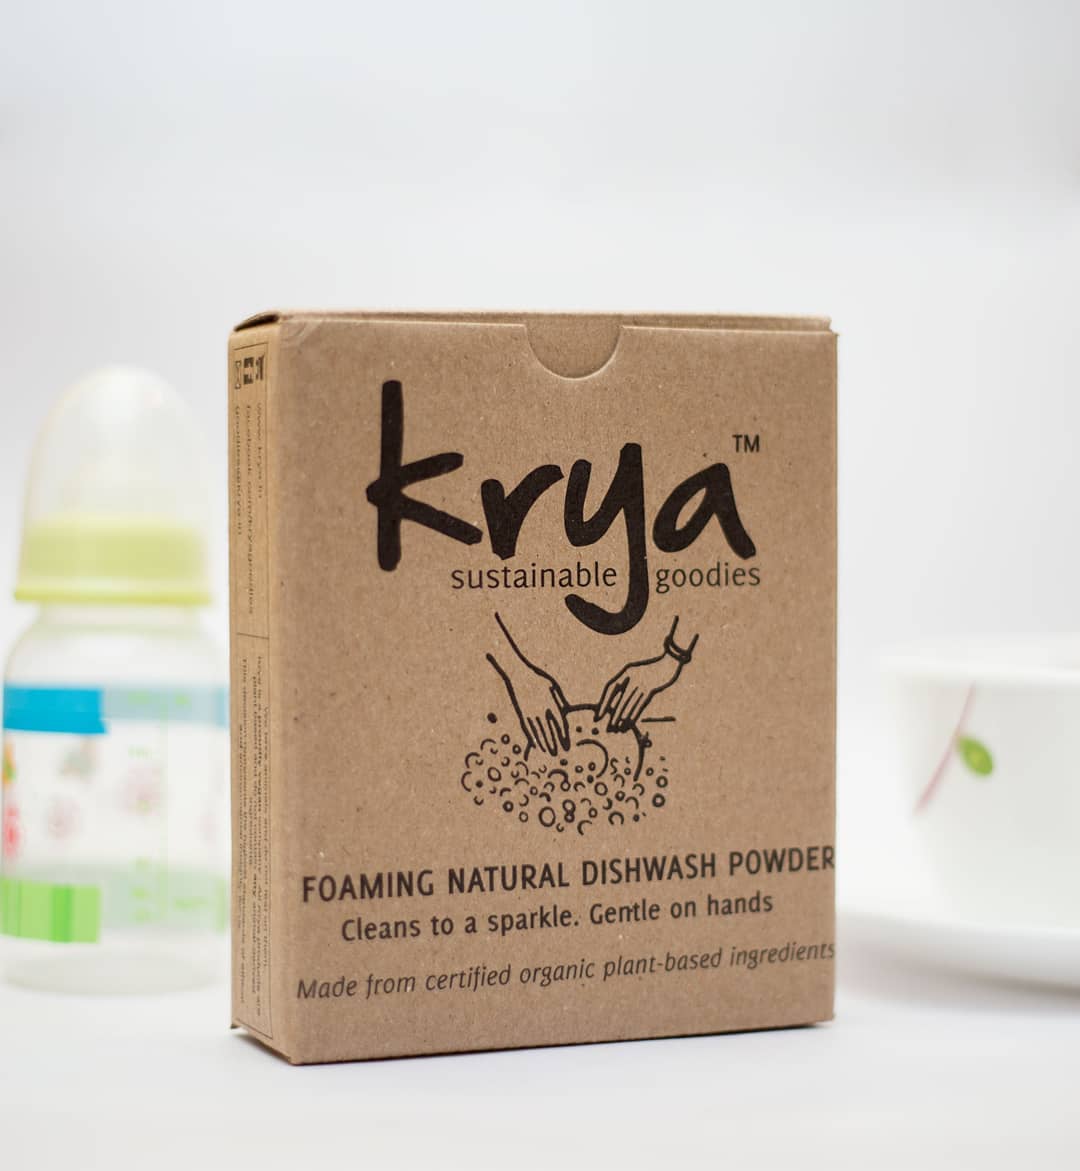 The all natural toxin free Krya dishwash